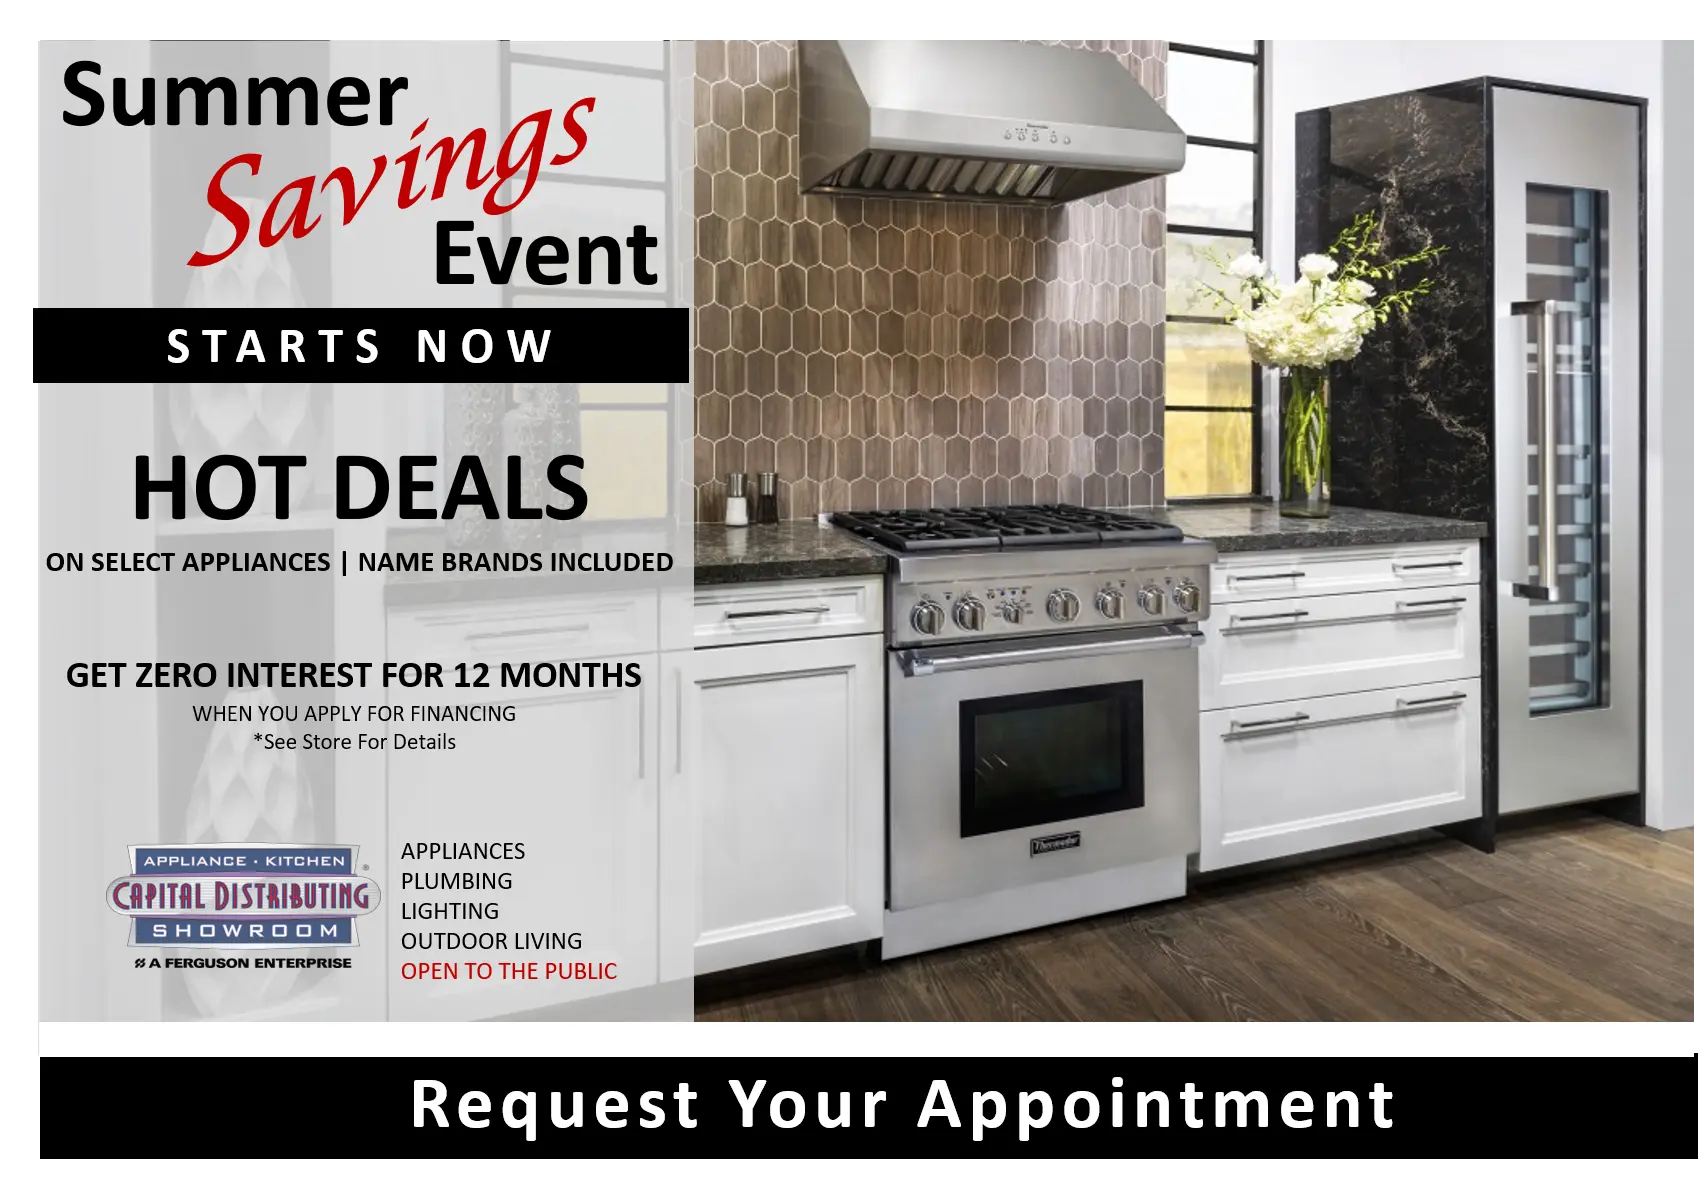 Summer Savings 2021 | Capital Distributing Kitchen Appliance Showroom 